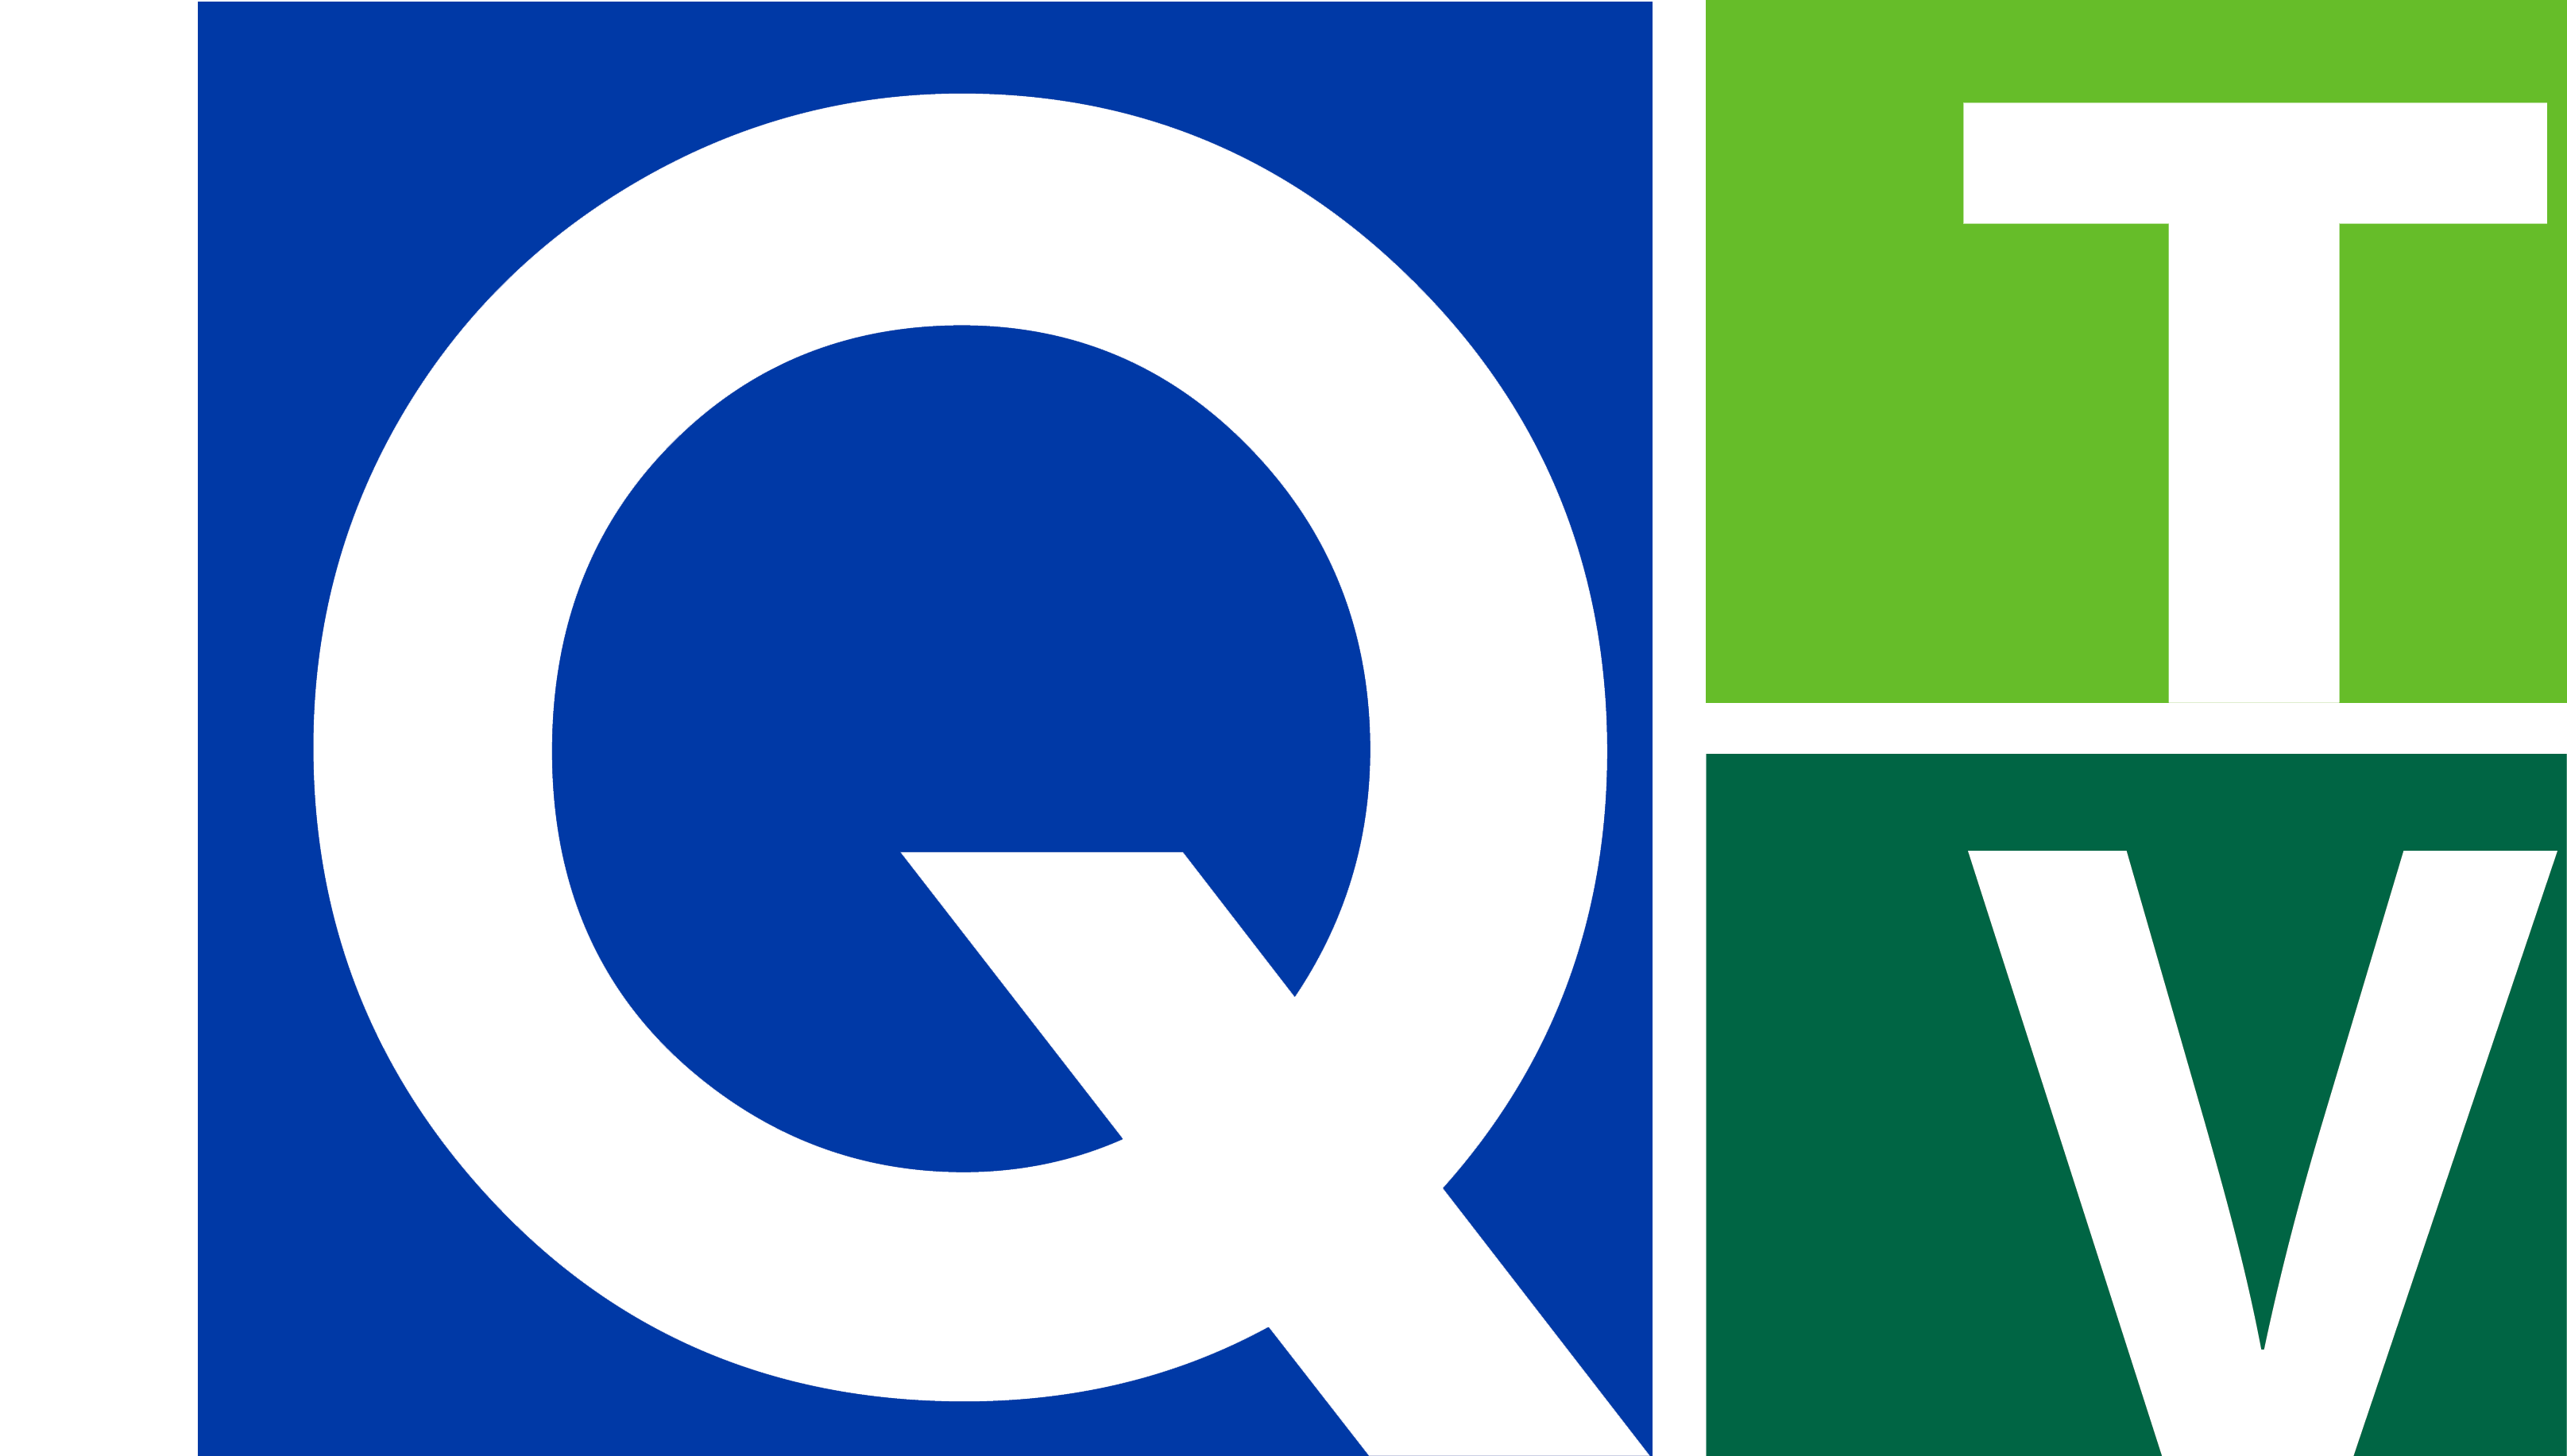 Blue Q Logo - Brand Resources